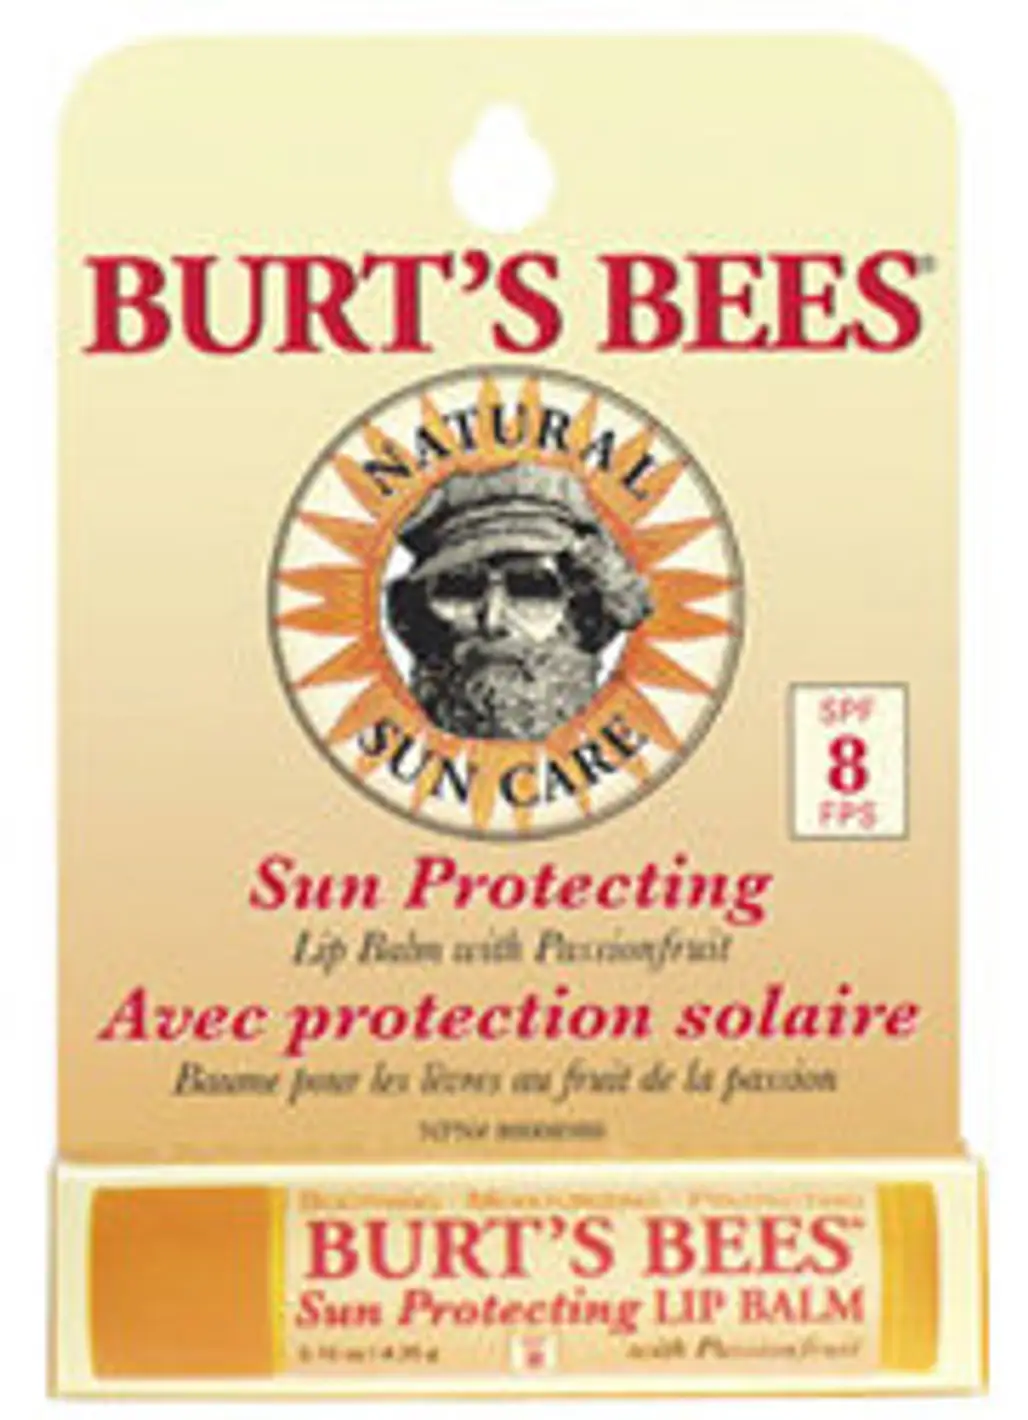 Burt’s Bees Sun Protecting Lip Balm with SPF 8